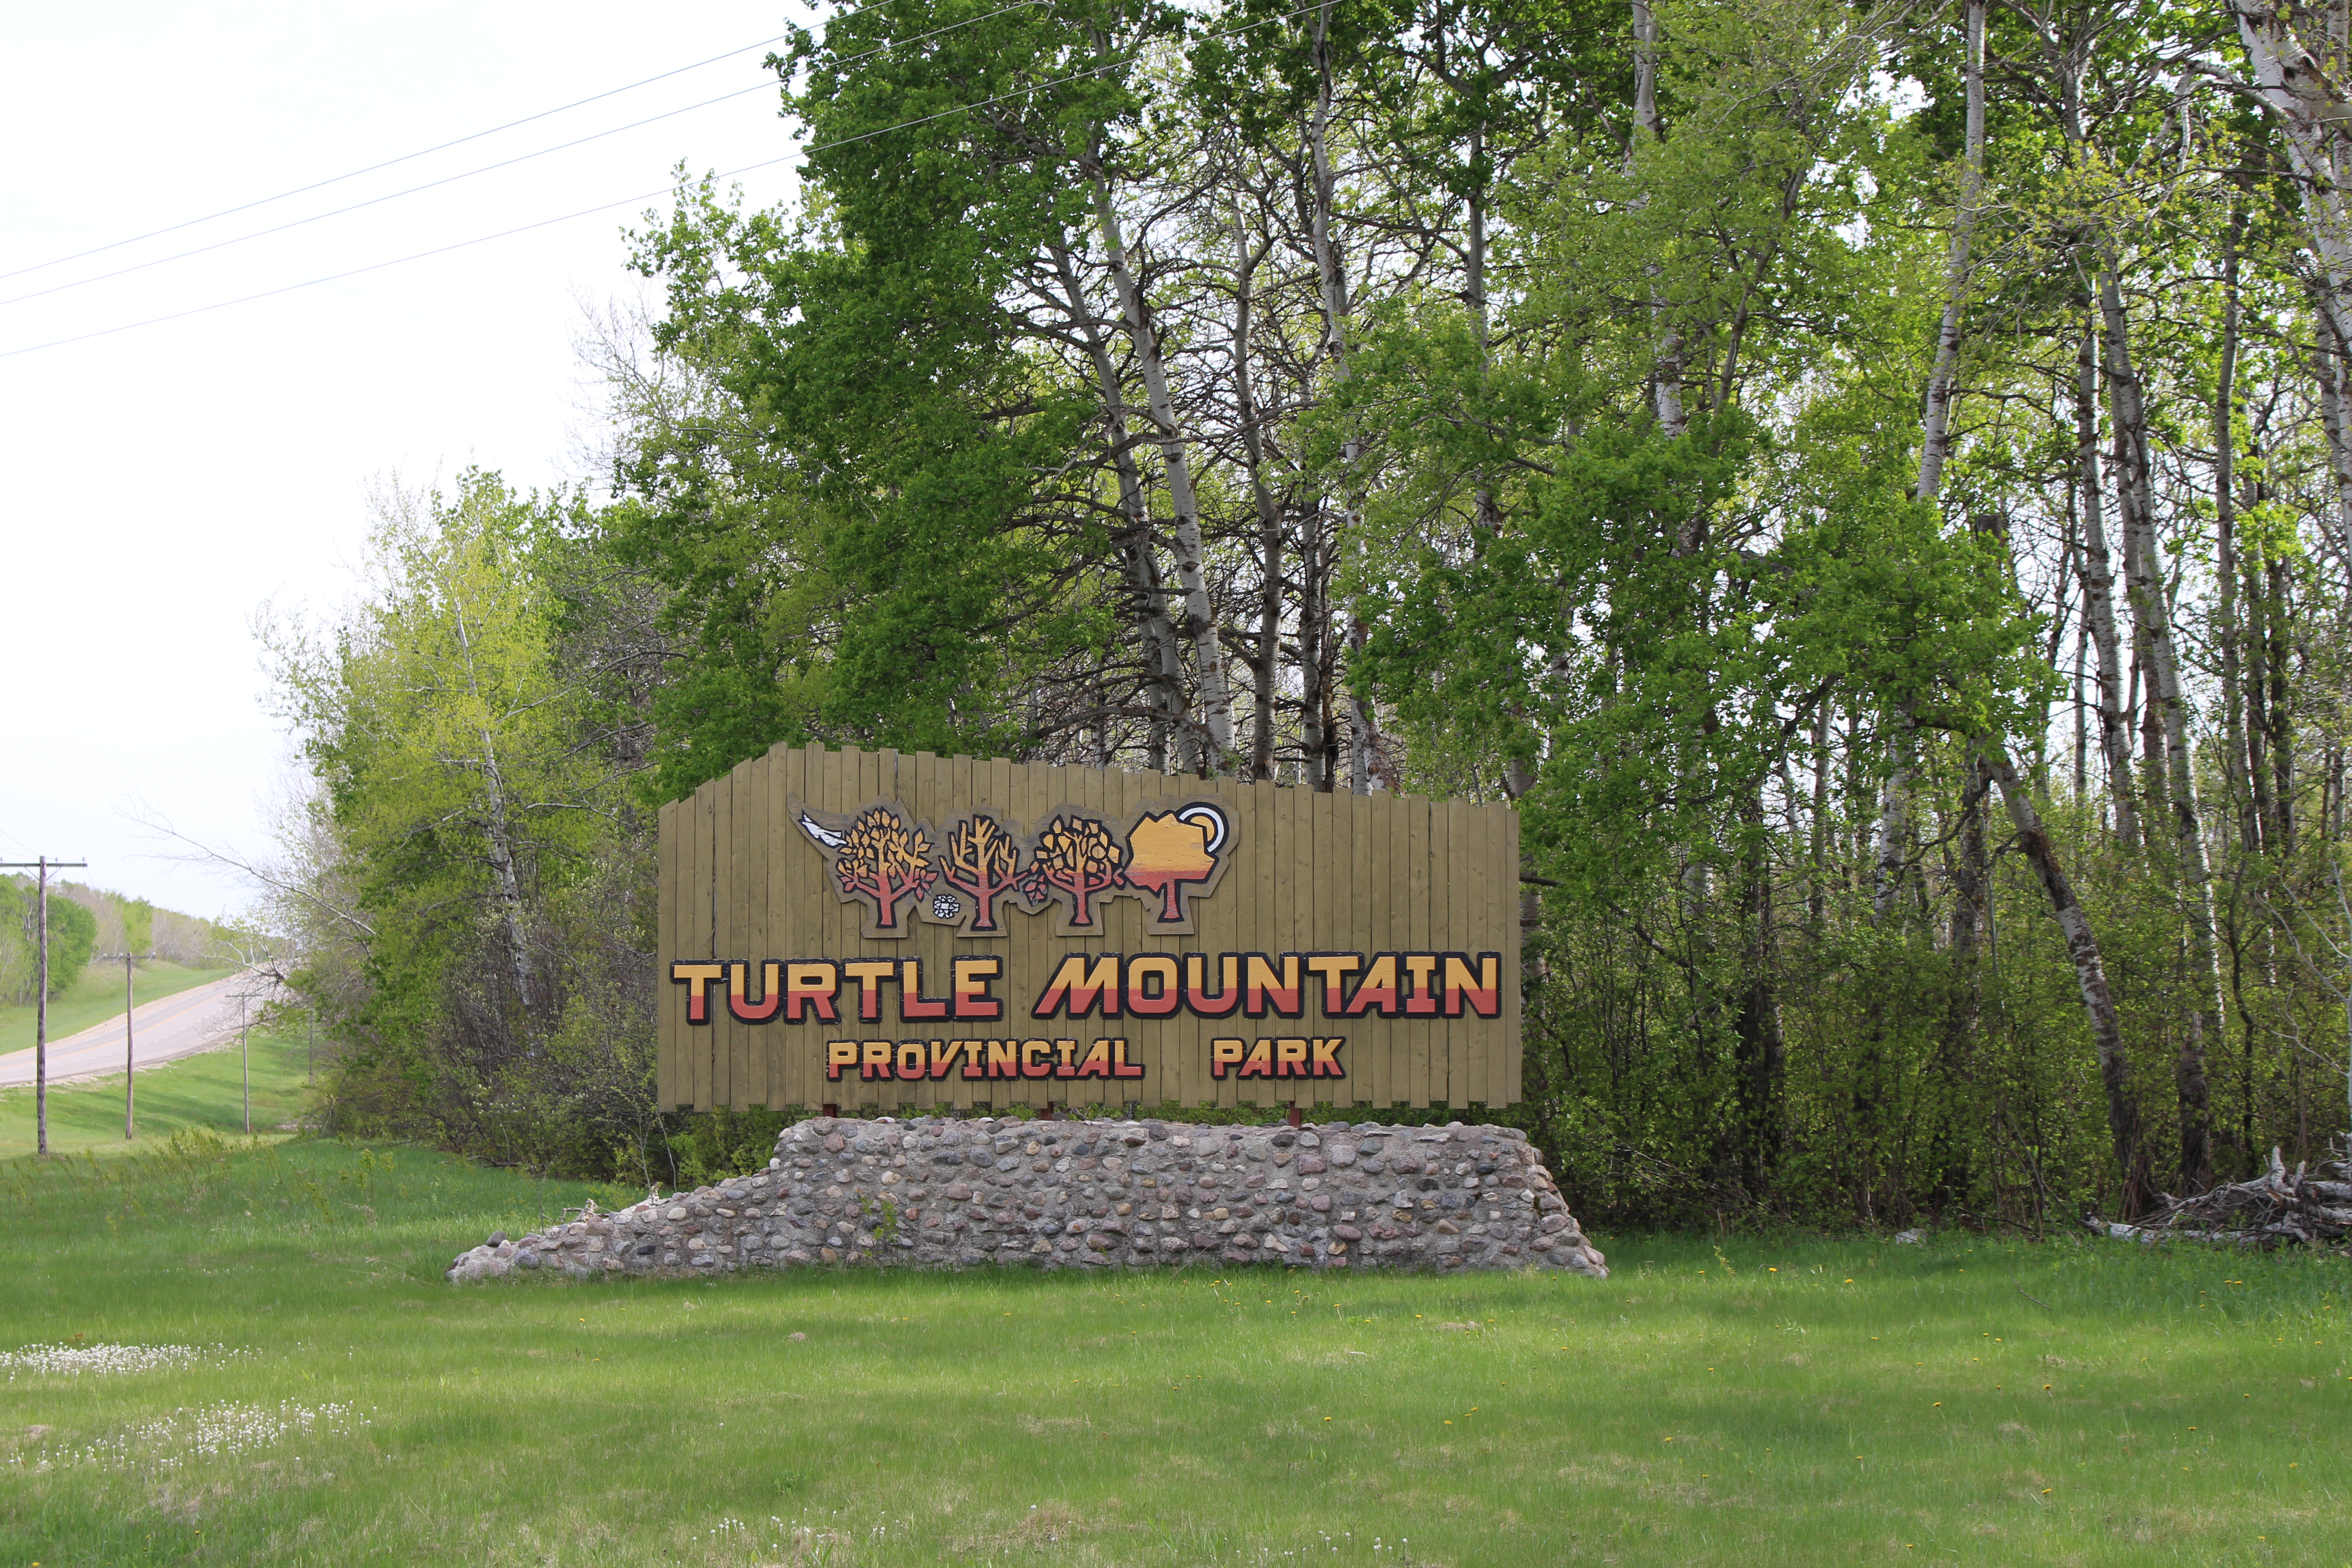 Turtle Mountain Provincial Park Wikipedia